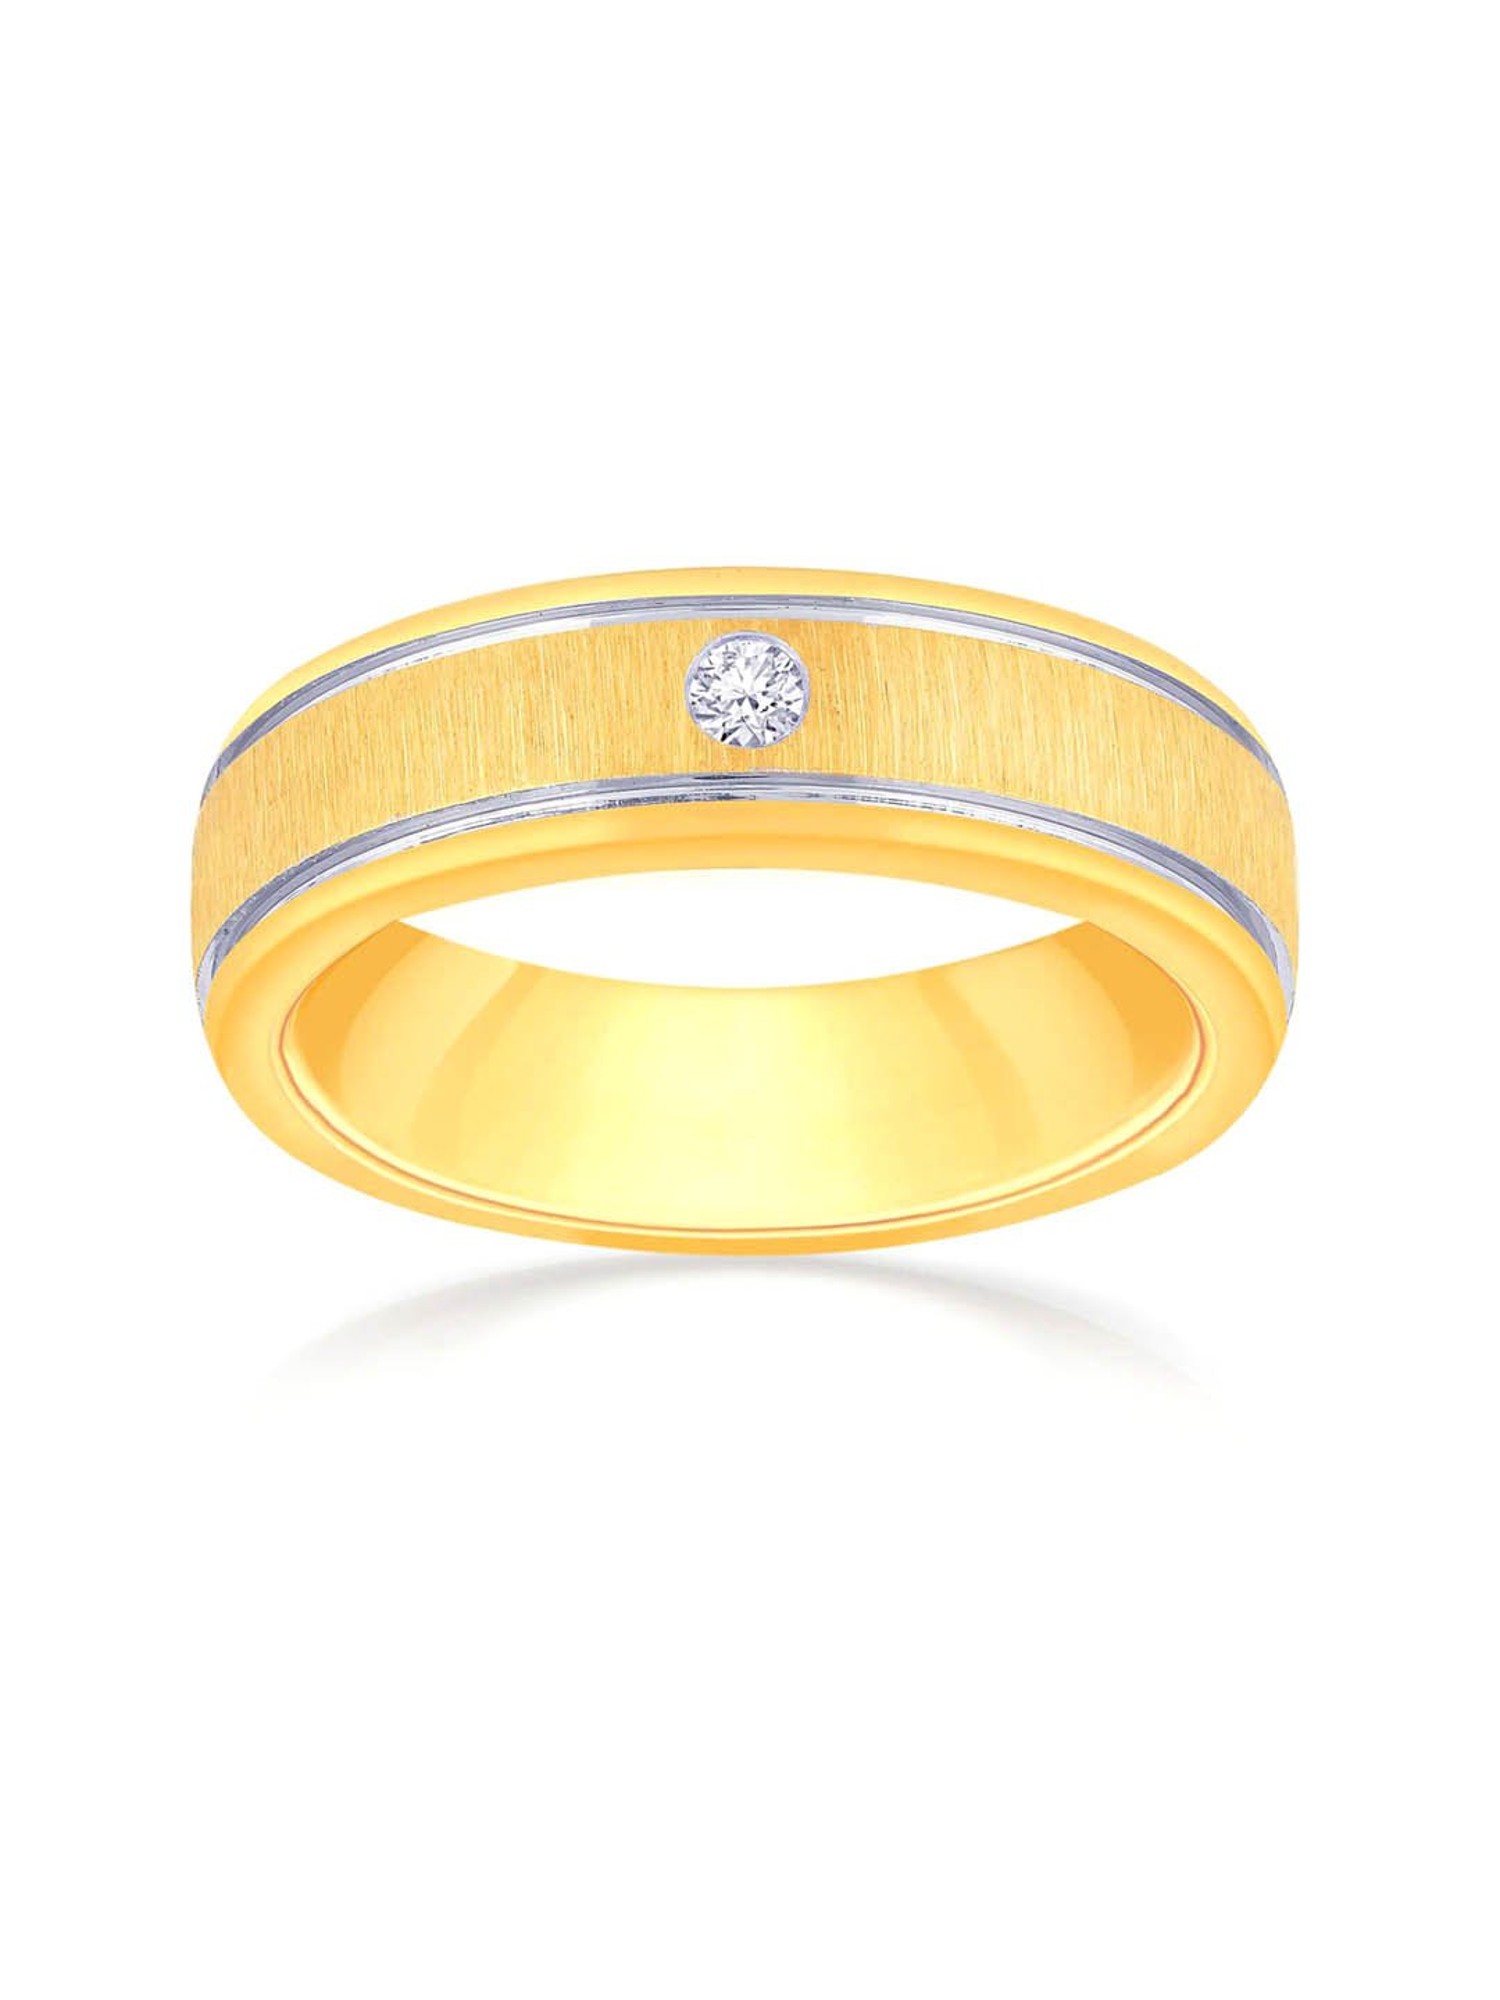 Buy Malabar Gold Ring ANDAAAAAAIRH for Men Online | Malabar Gold & Diamonds